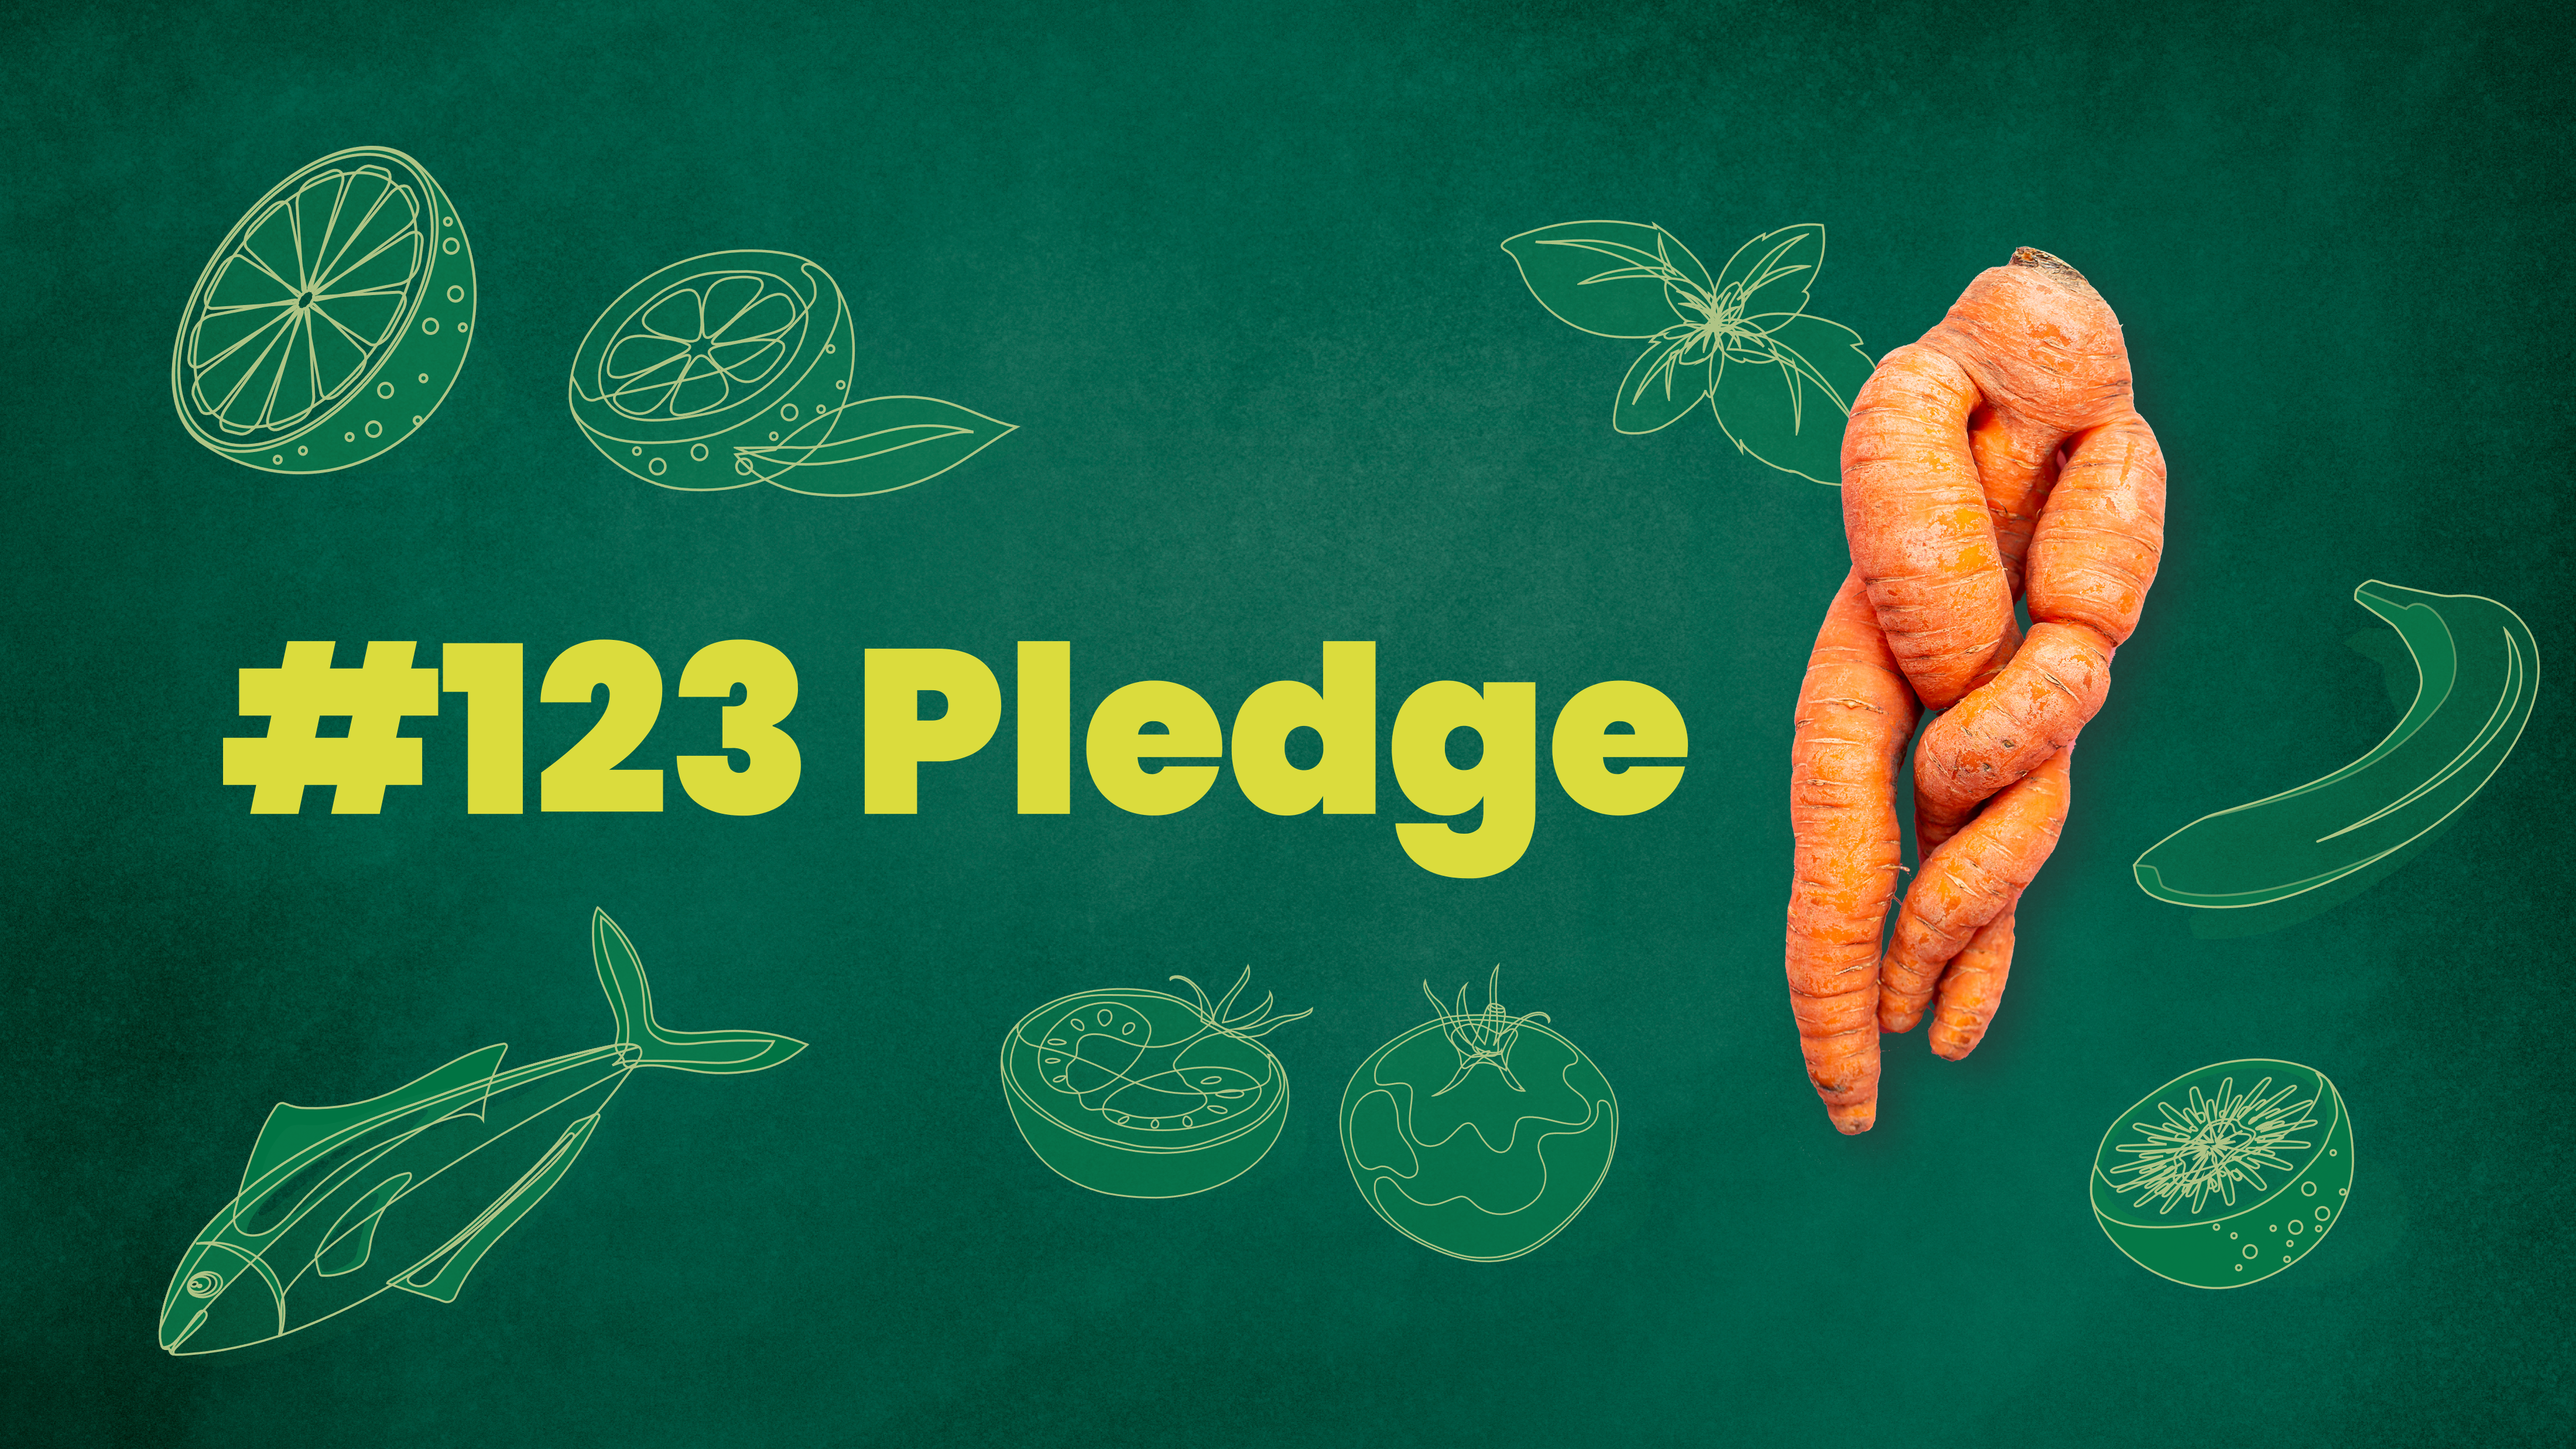 123 Pledge on green background